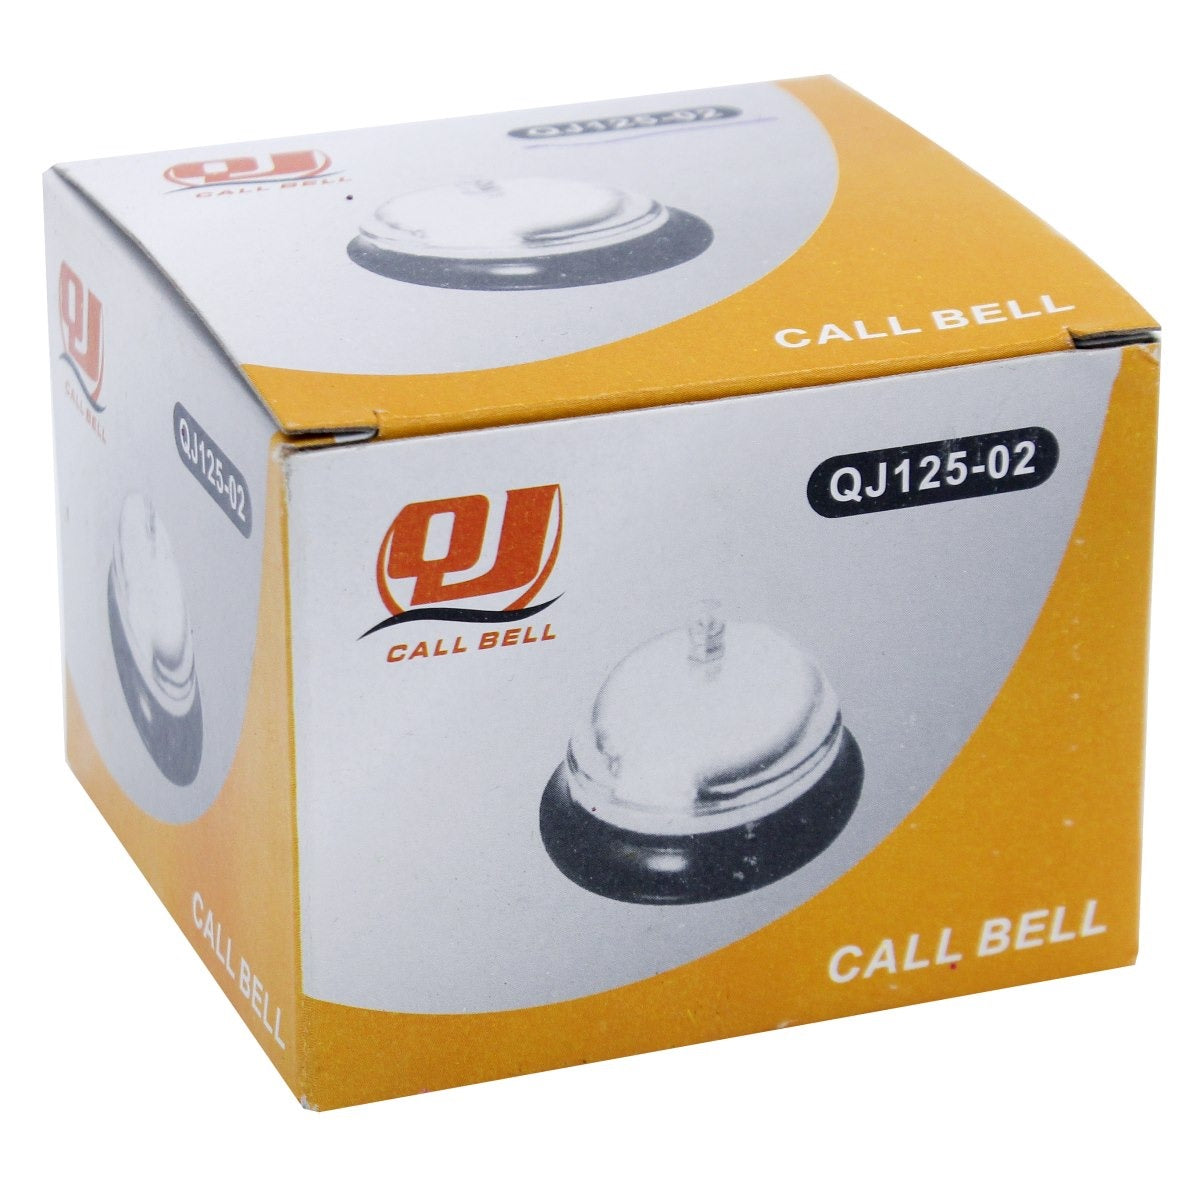 jags-mumbai Office Desk Stationery Office Call Bell Small